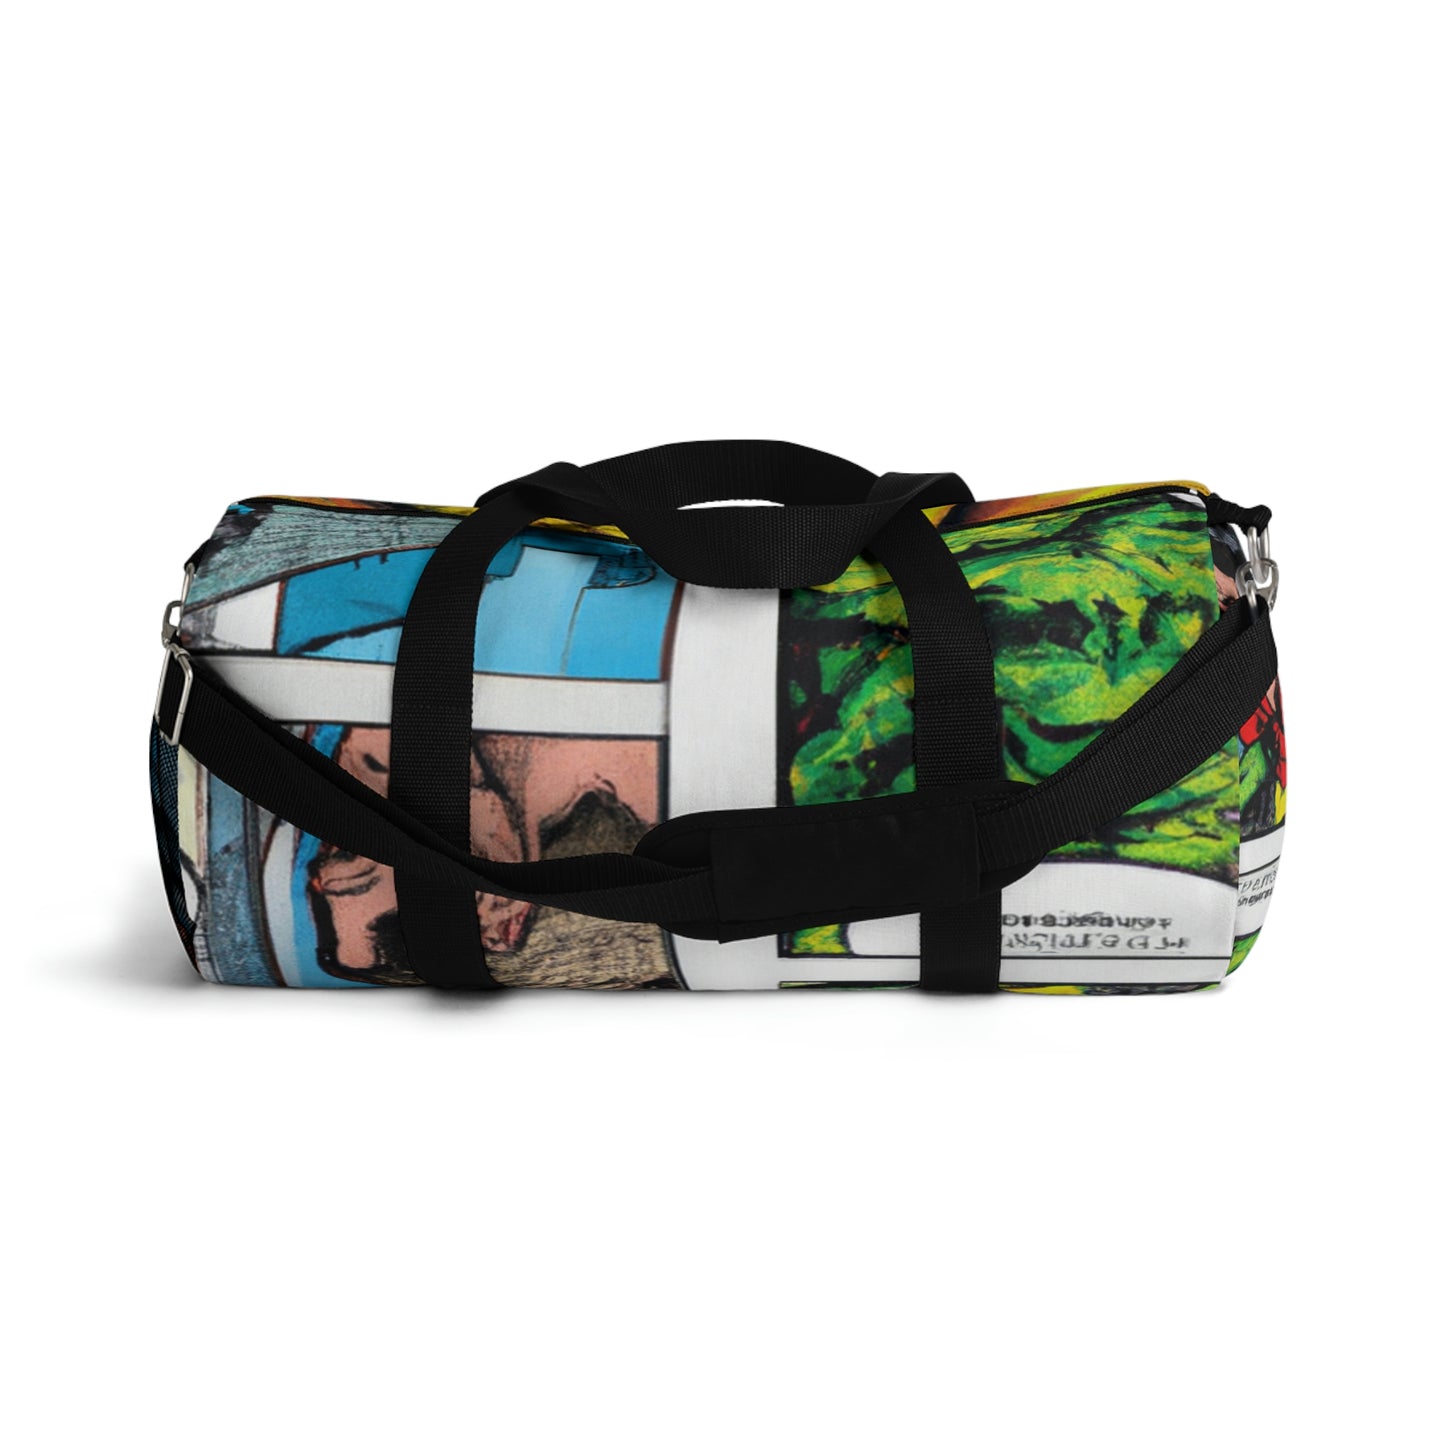 Vonstrohm & Son Luxury Luggage - Comic Book Duffel Bag